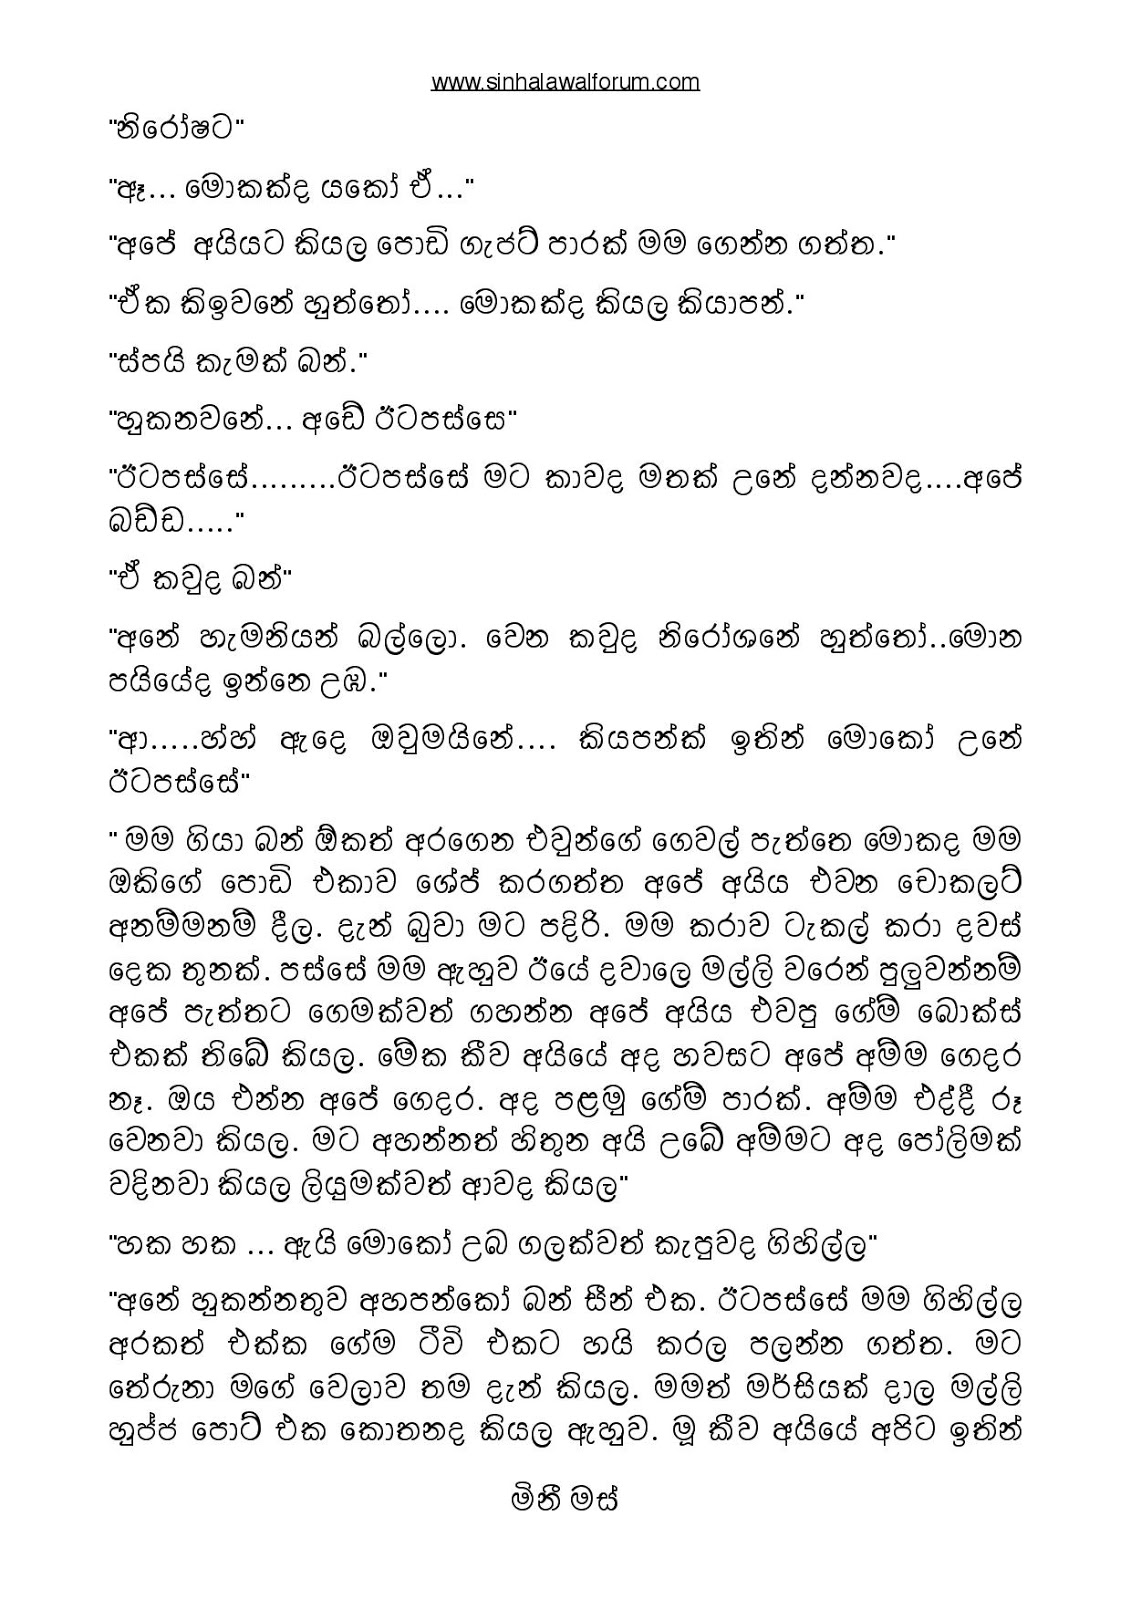 Old Sinhala Baila Songs Lyrics - sermegans.blogspot.com